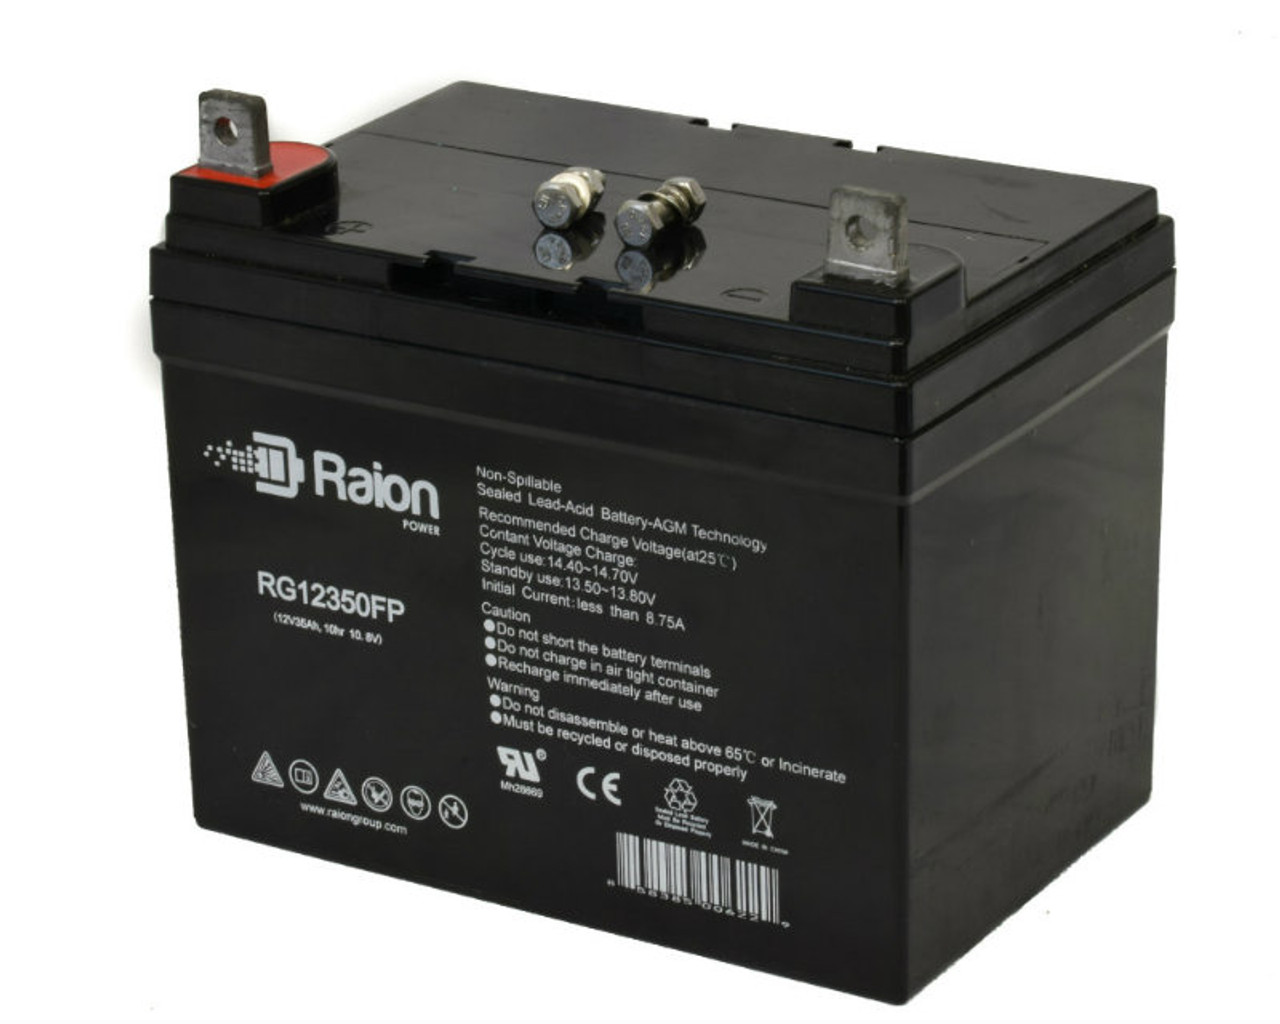 Raion Power Replacement 12V 35Ah RG12350FP Battery for Power Kingdom PK35-12